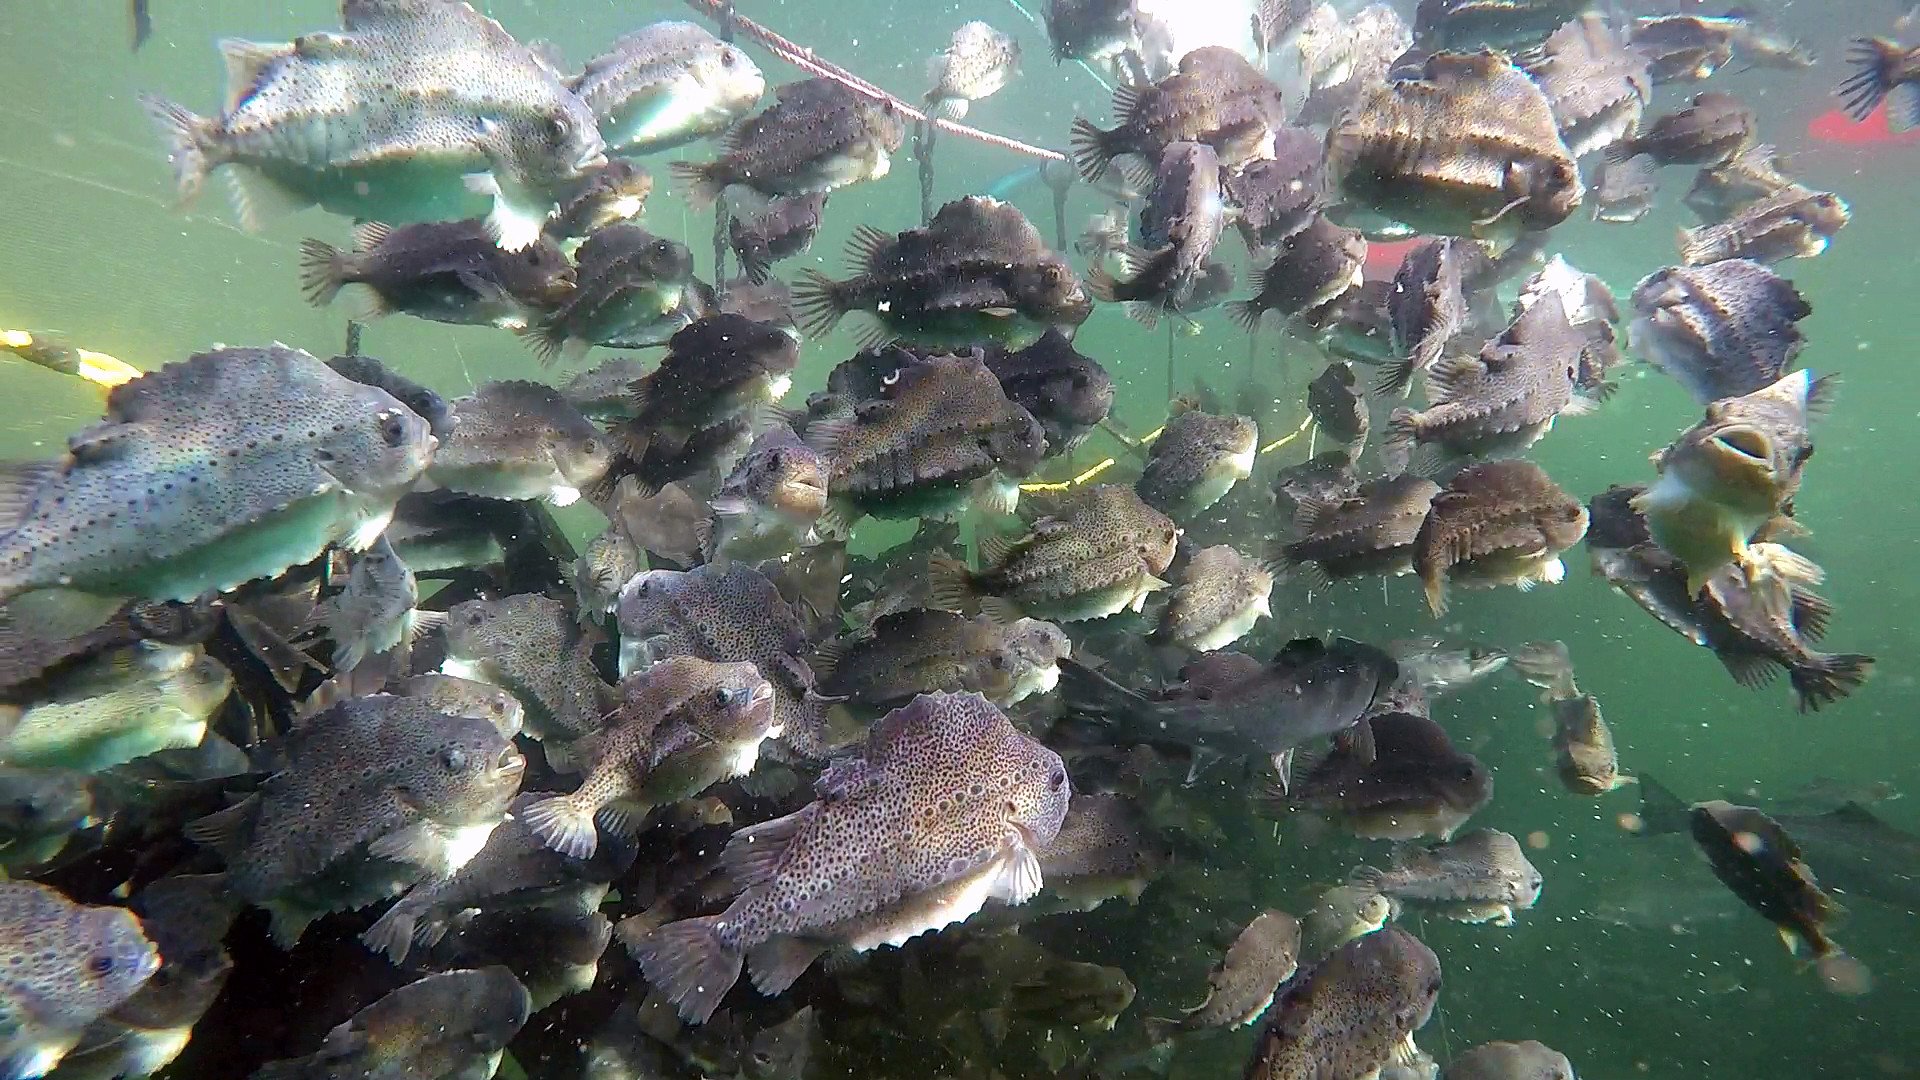 Lumpfish swimming in a stim